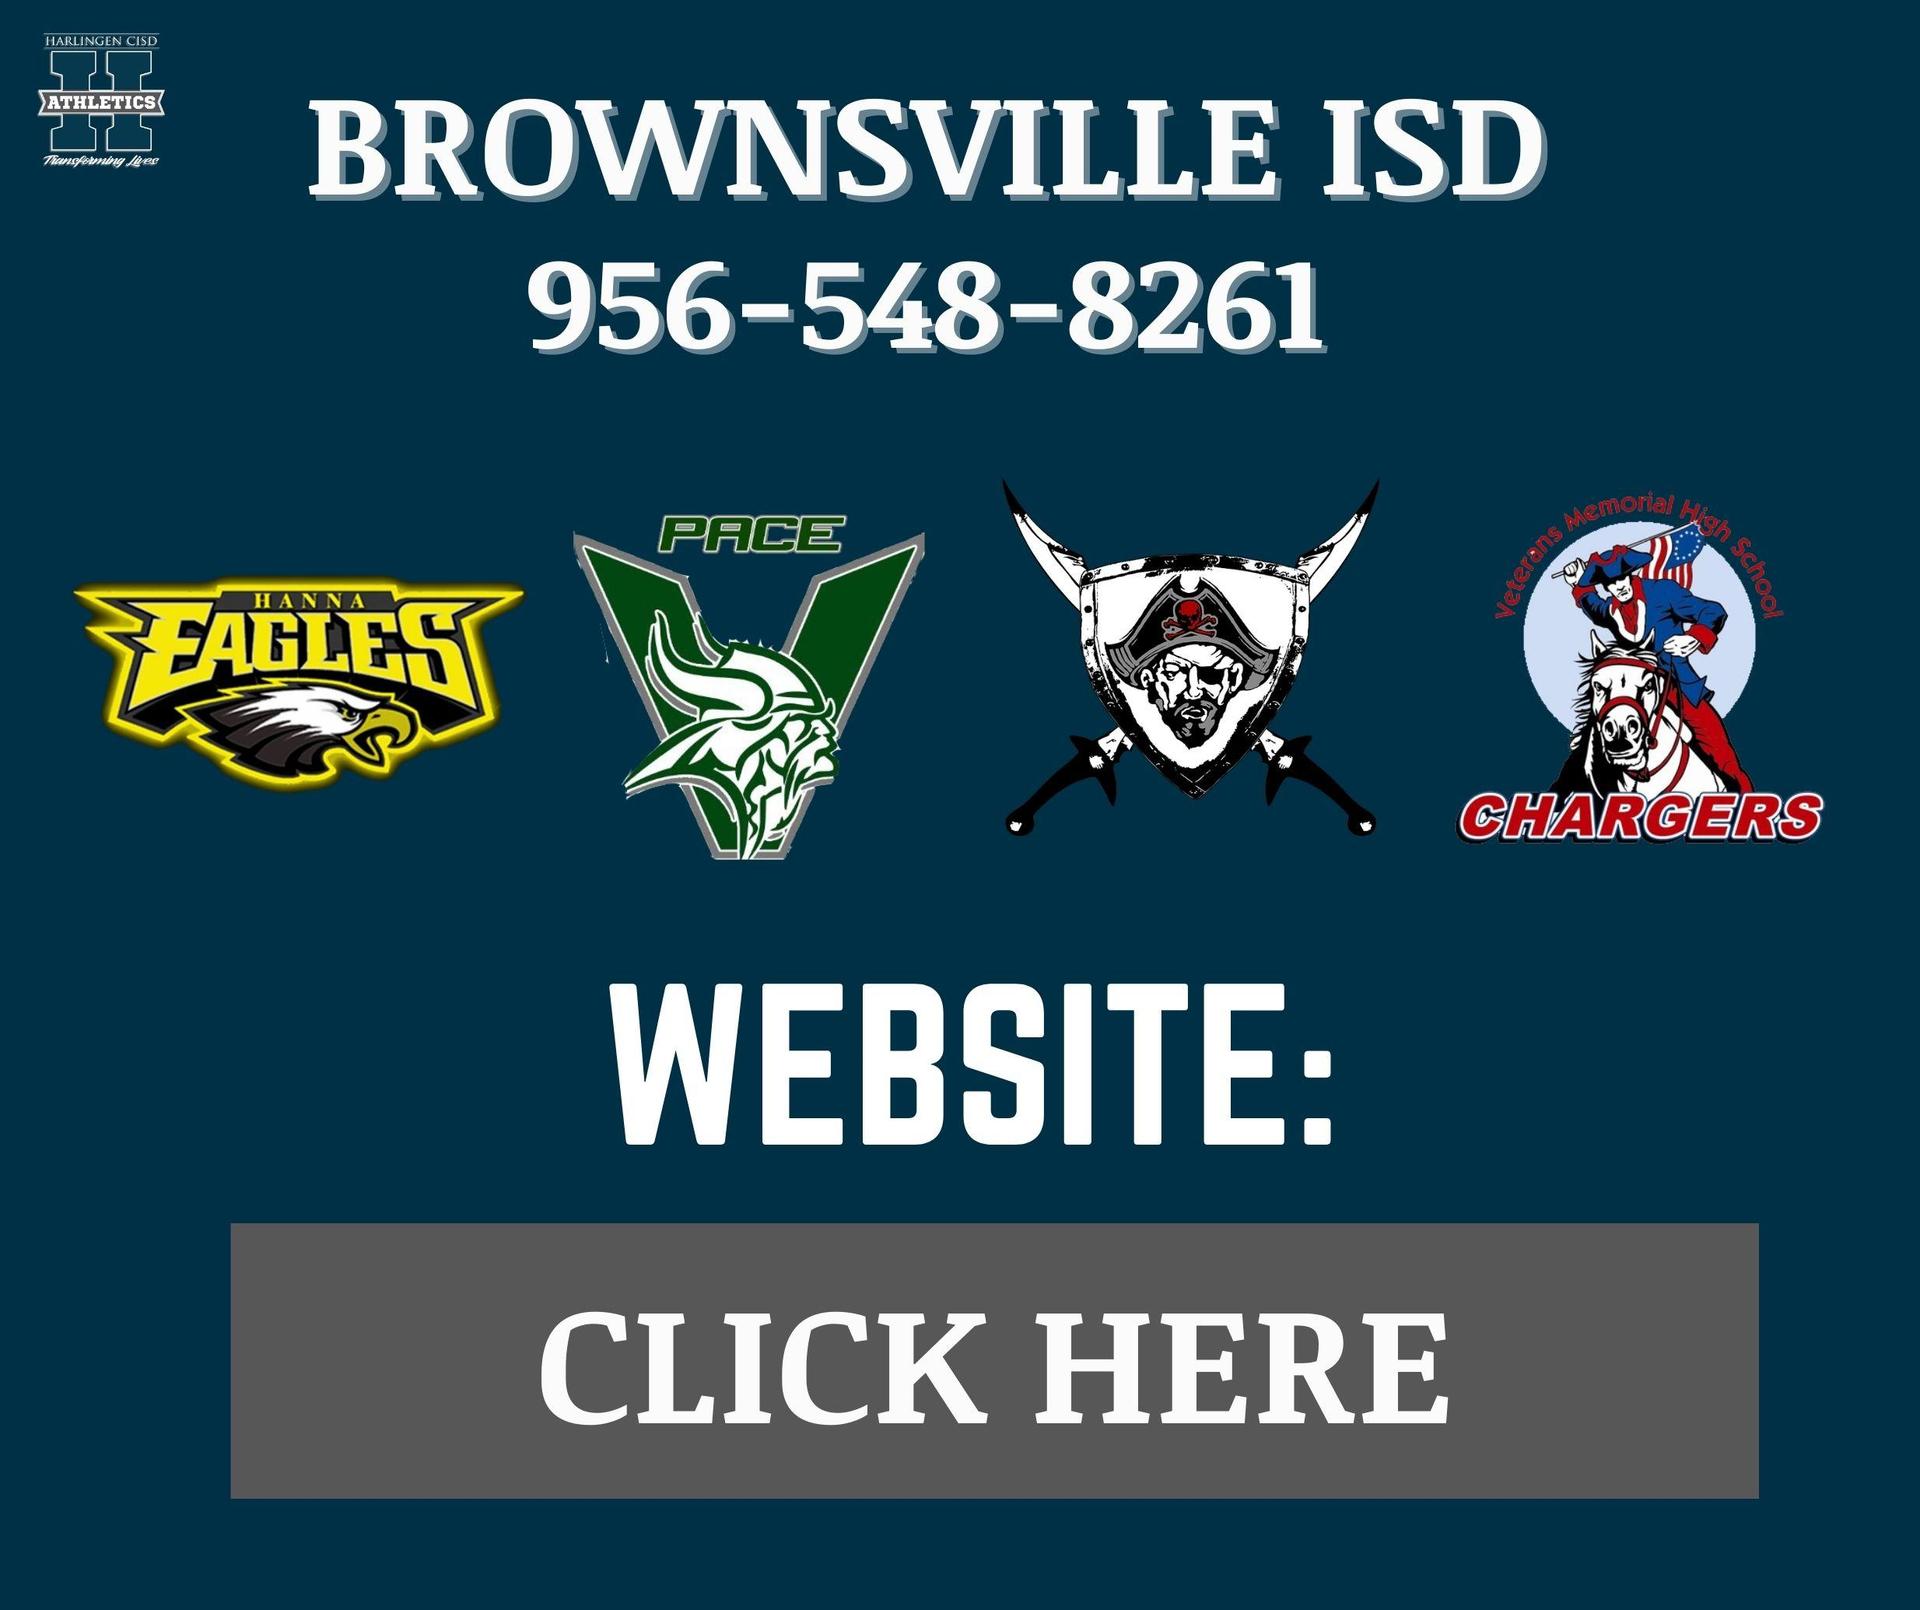 Brownsville - Away Tickets Link